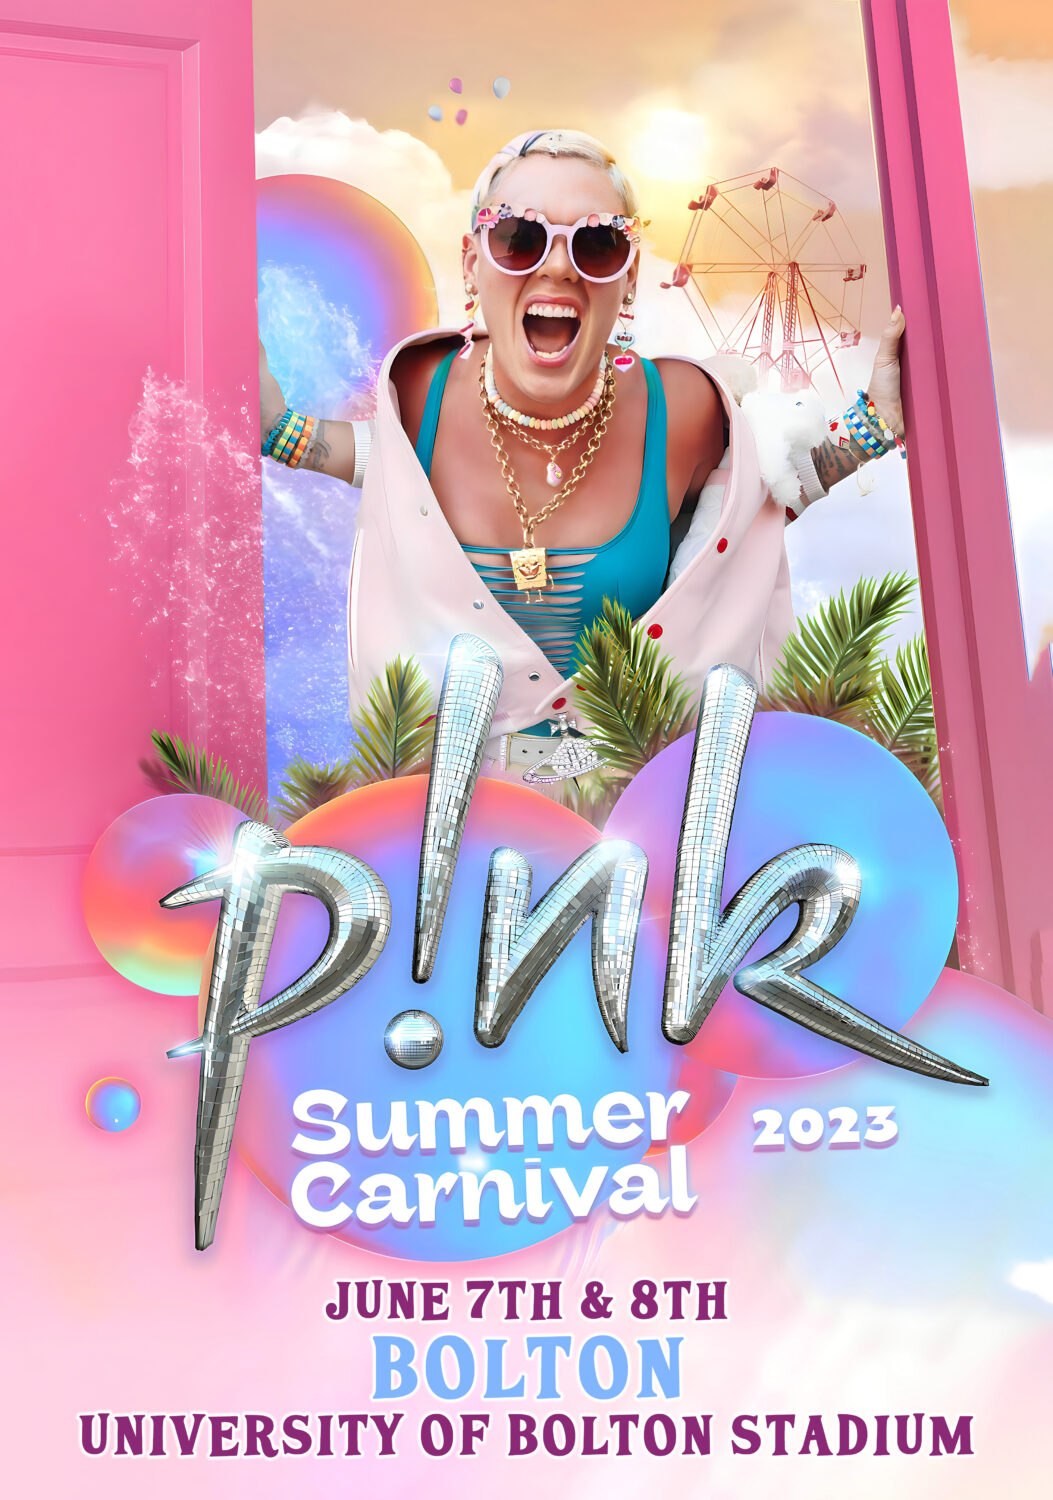 P!NK (PINK) Summer Carnival 2023 UK Tour: BOLTON Poster